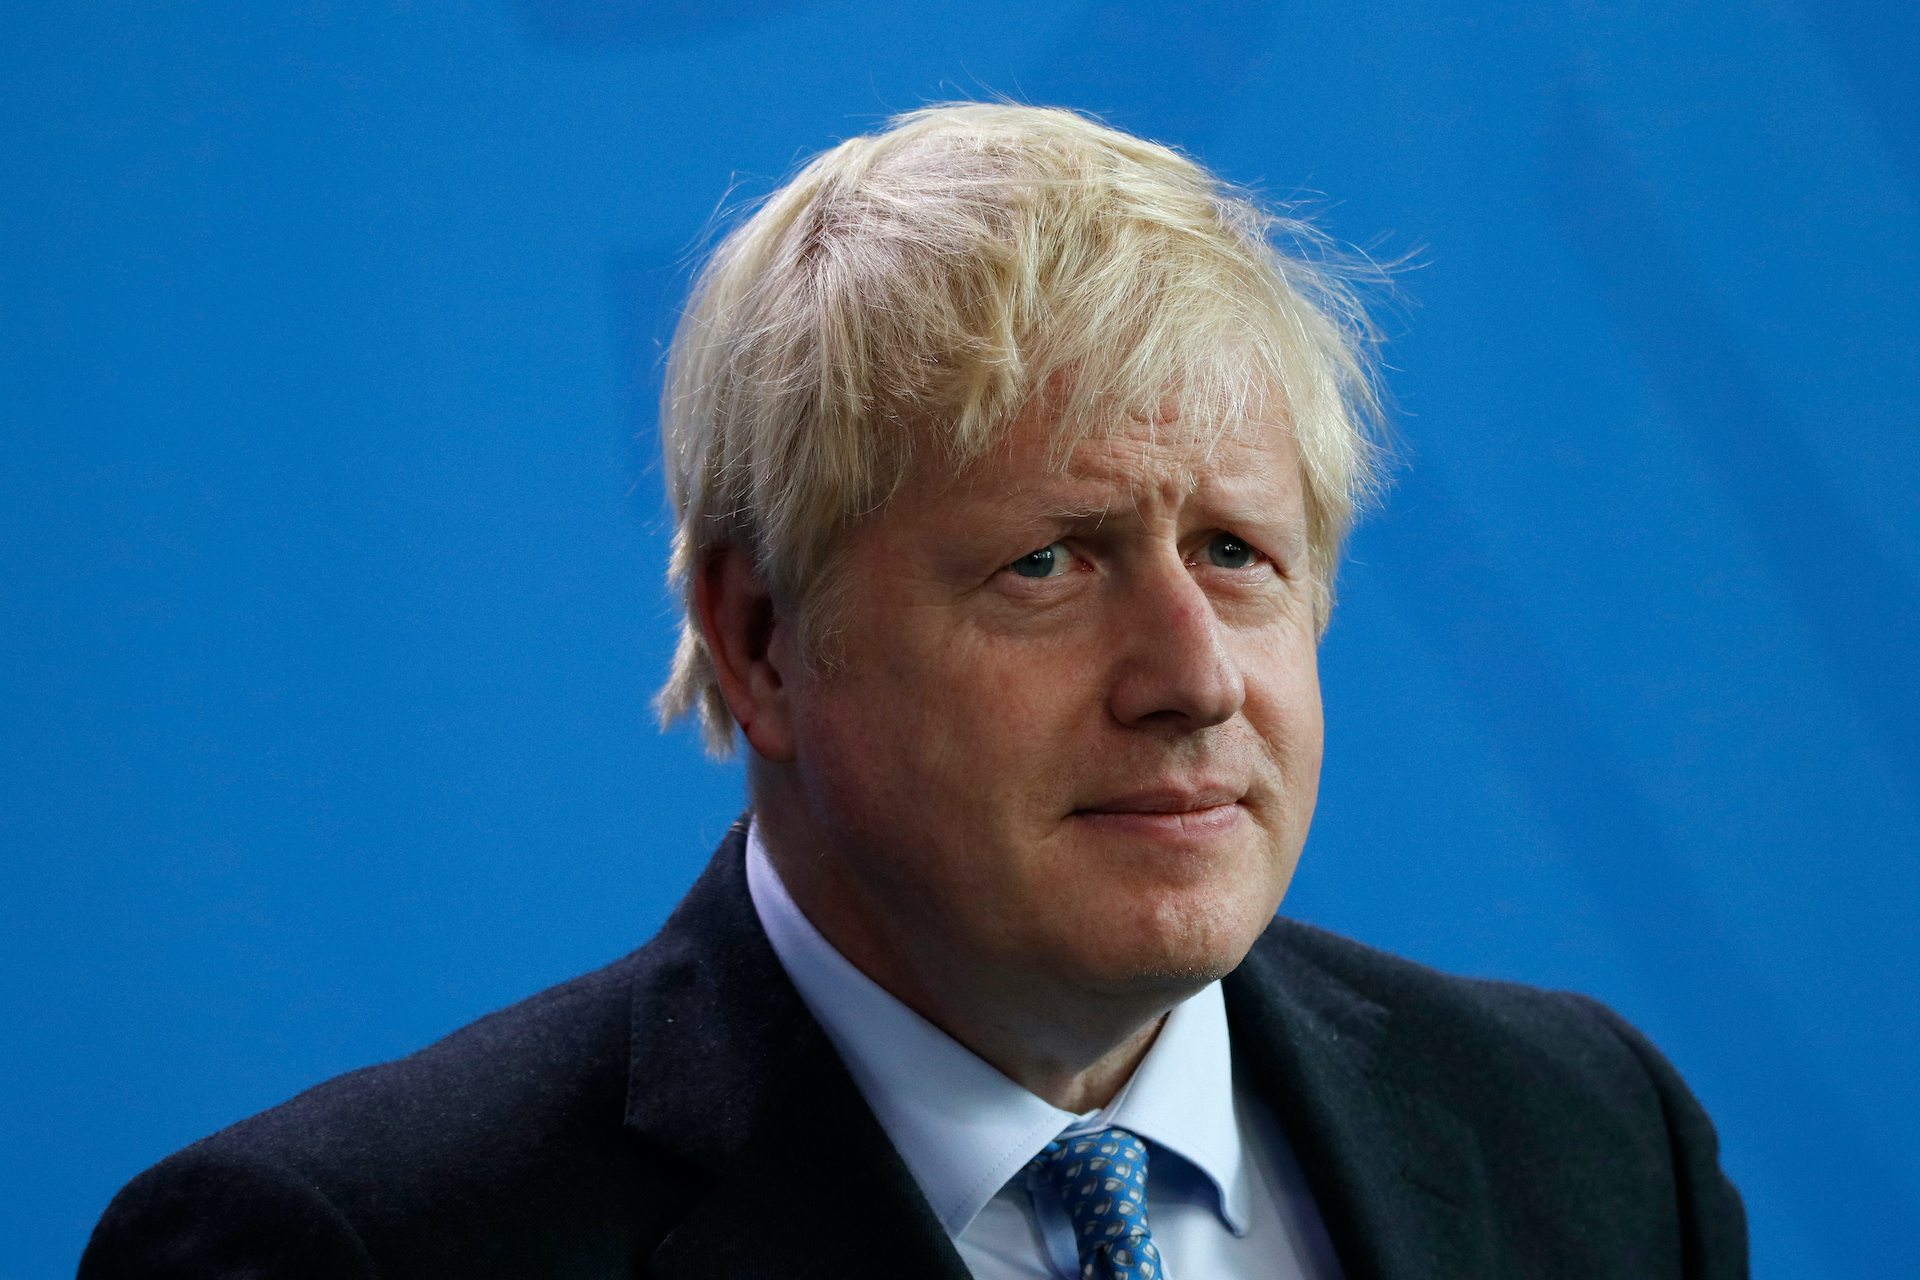 Mini Boris Johnson': Baby born with hairstyle similar to Boris Johnson -  The Current